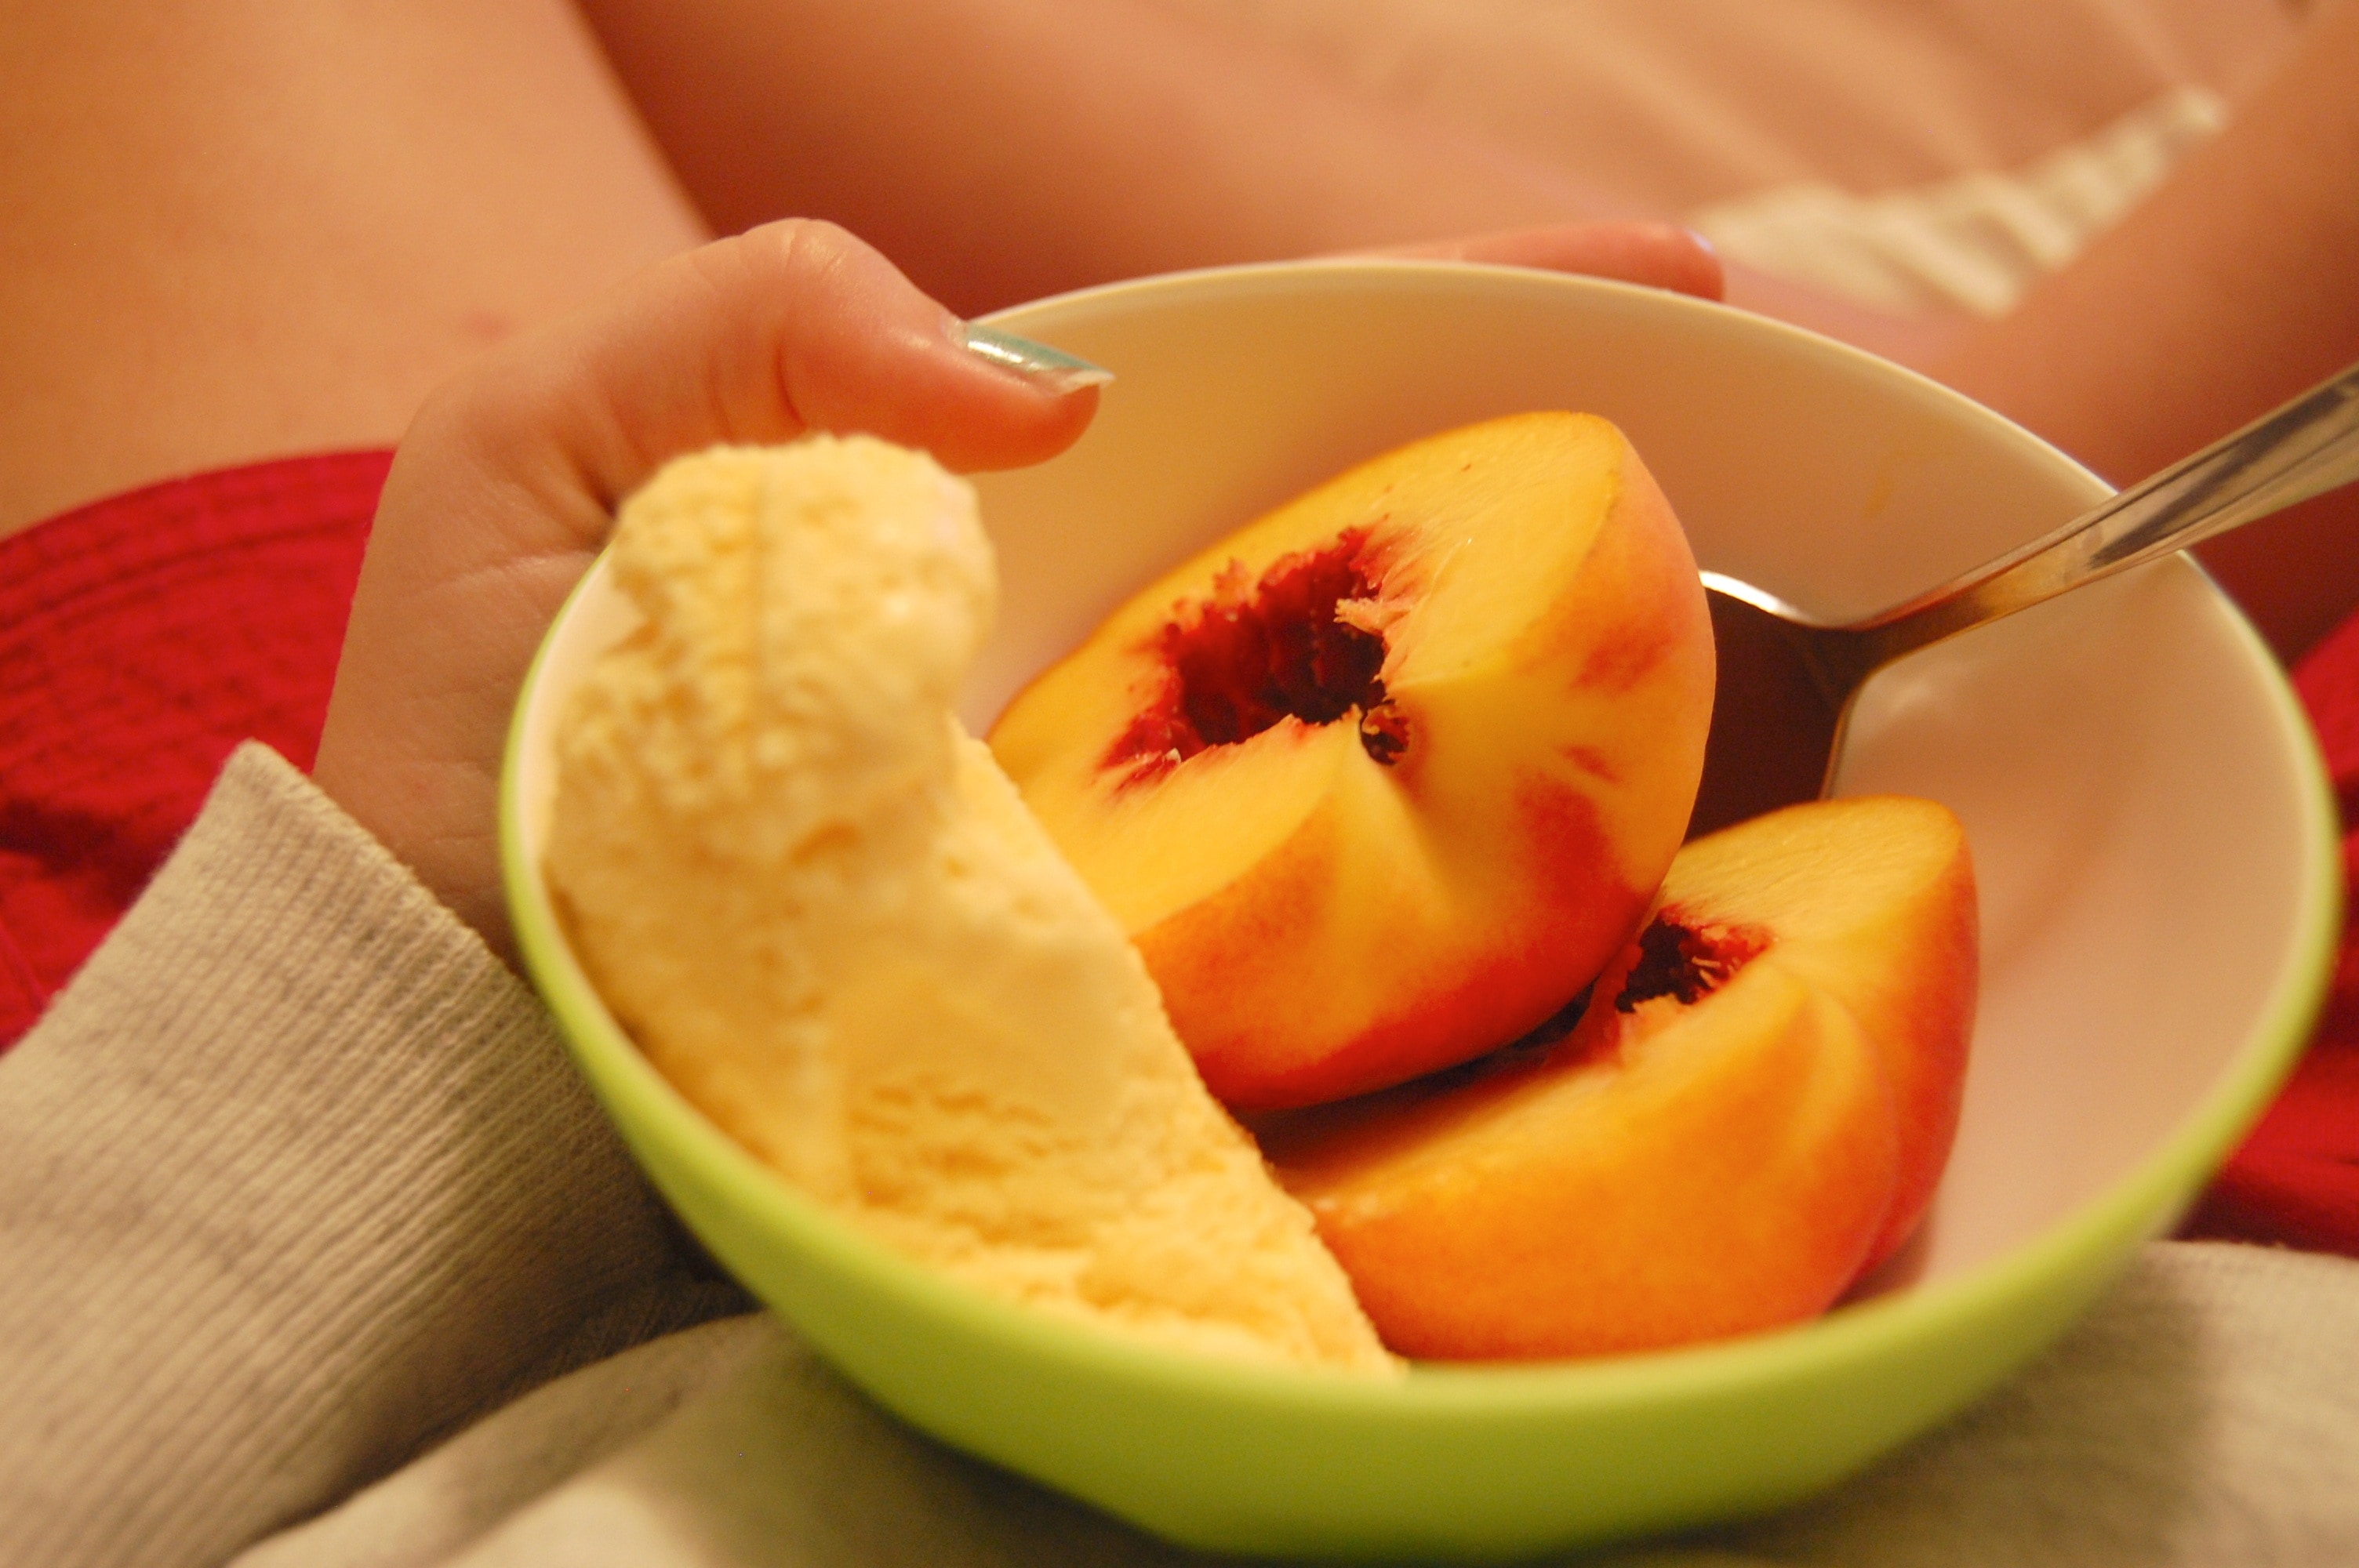 ice cream and peach